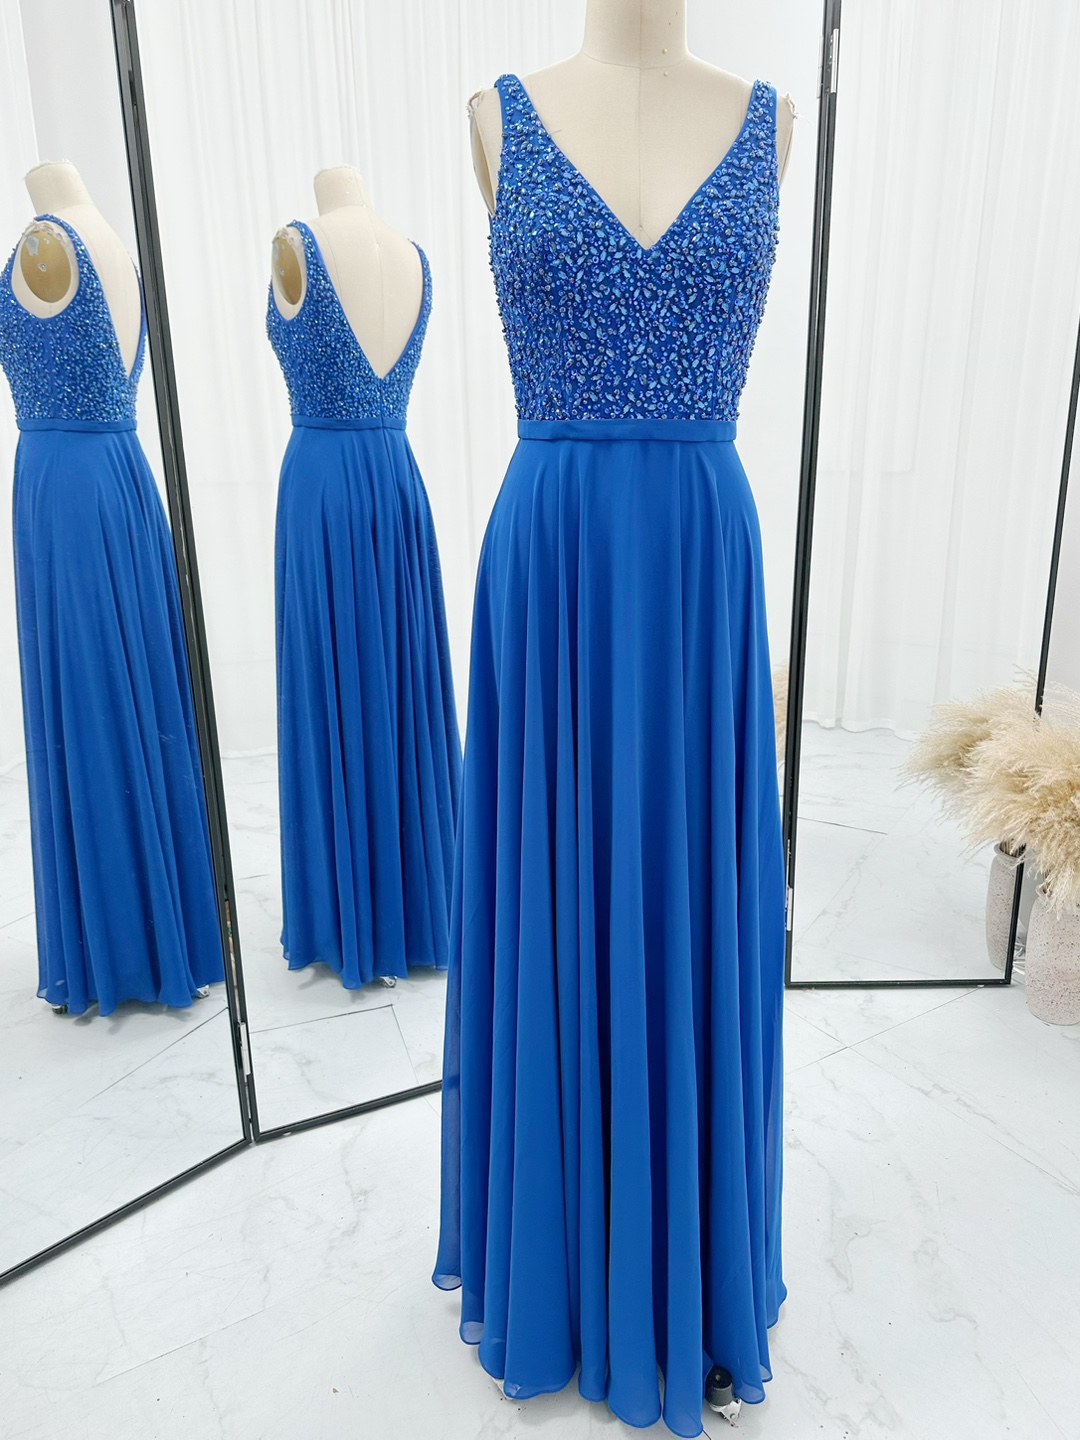 V Neck Royal Blue Long Chiffon Prom Dress With Beaded Bodice